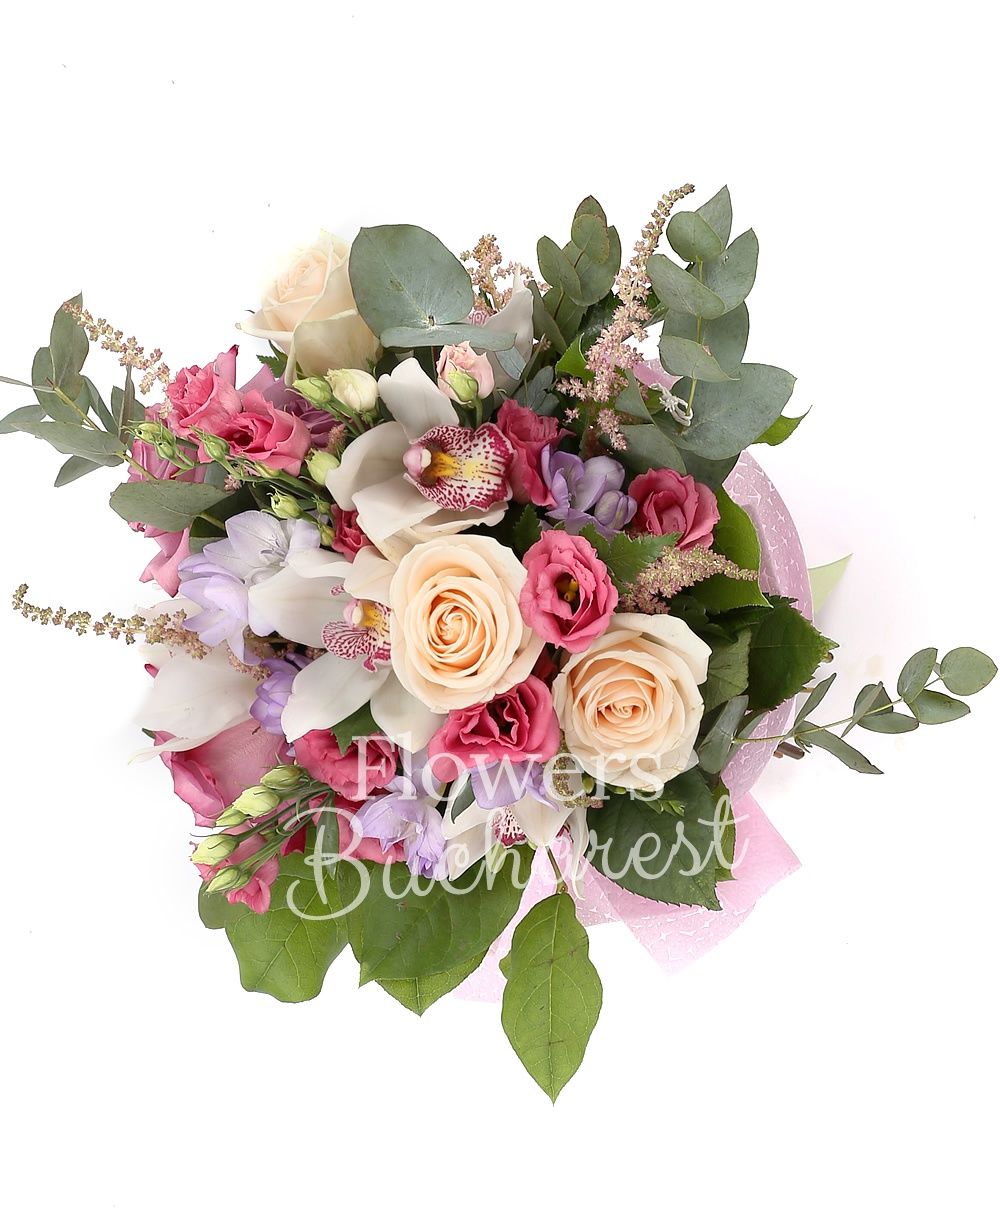 3 cream roses, 5 pink lisianthus, 3 purple roses, 5 pink astilbe, 5 purple freesias, white cymbidium, greenery